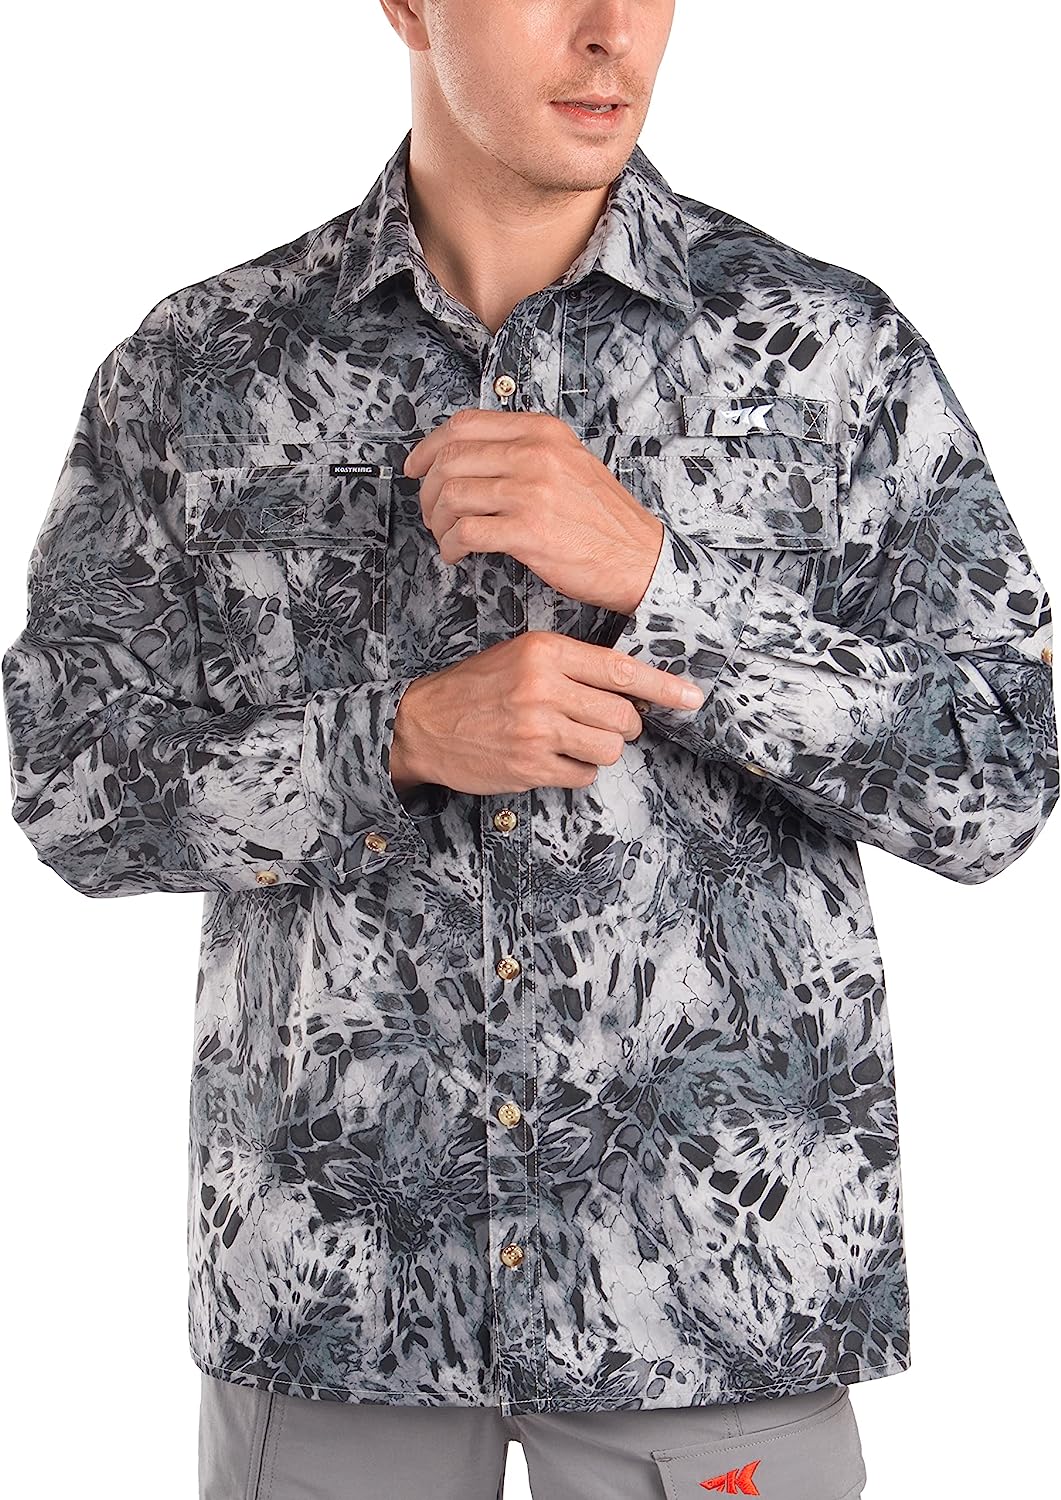 KastKing ReKon Men's Fishing Shirts Smart Design, UPF 50+ Quick-Dry  Breathable